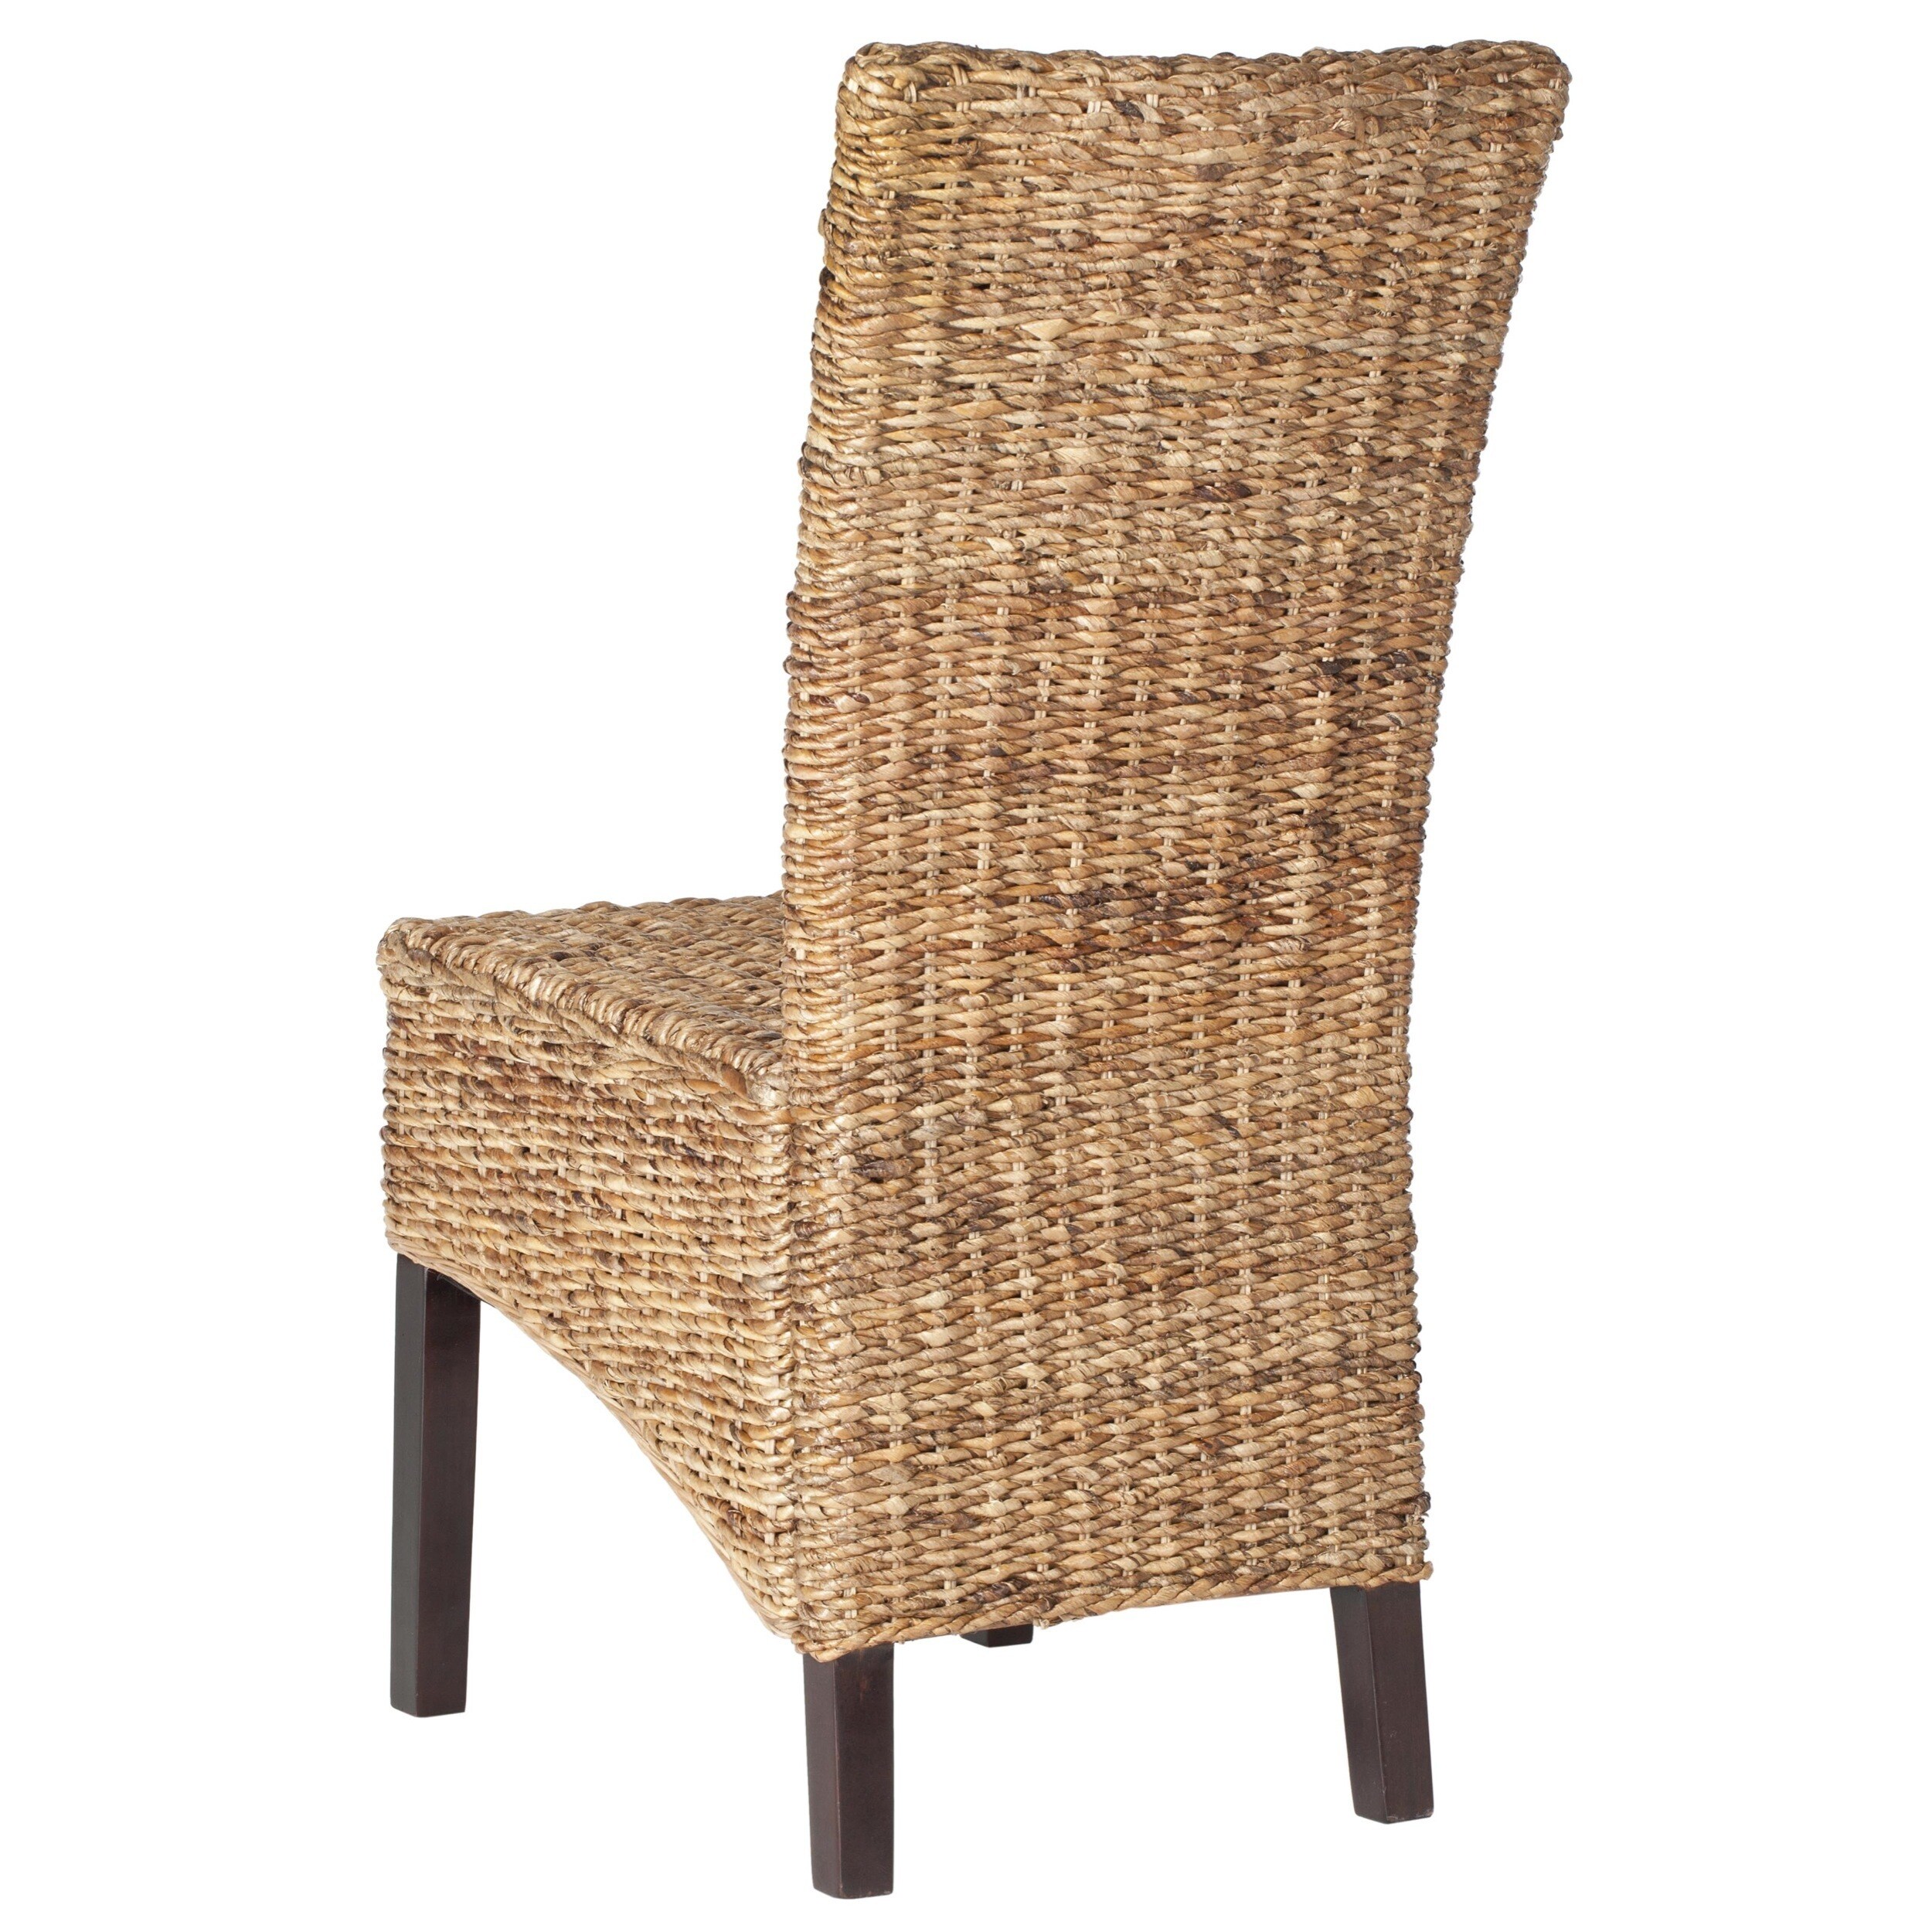 SAFAVIEH Kiska Natural Dining Chair (Set of 2) - 18.1" x 23.2" x 40.6"